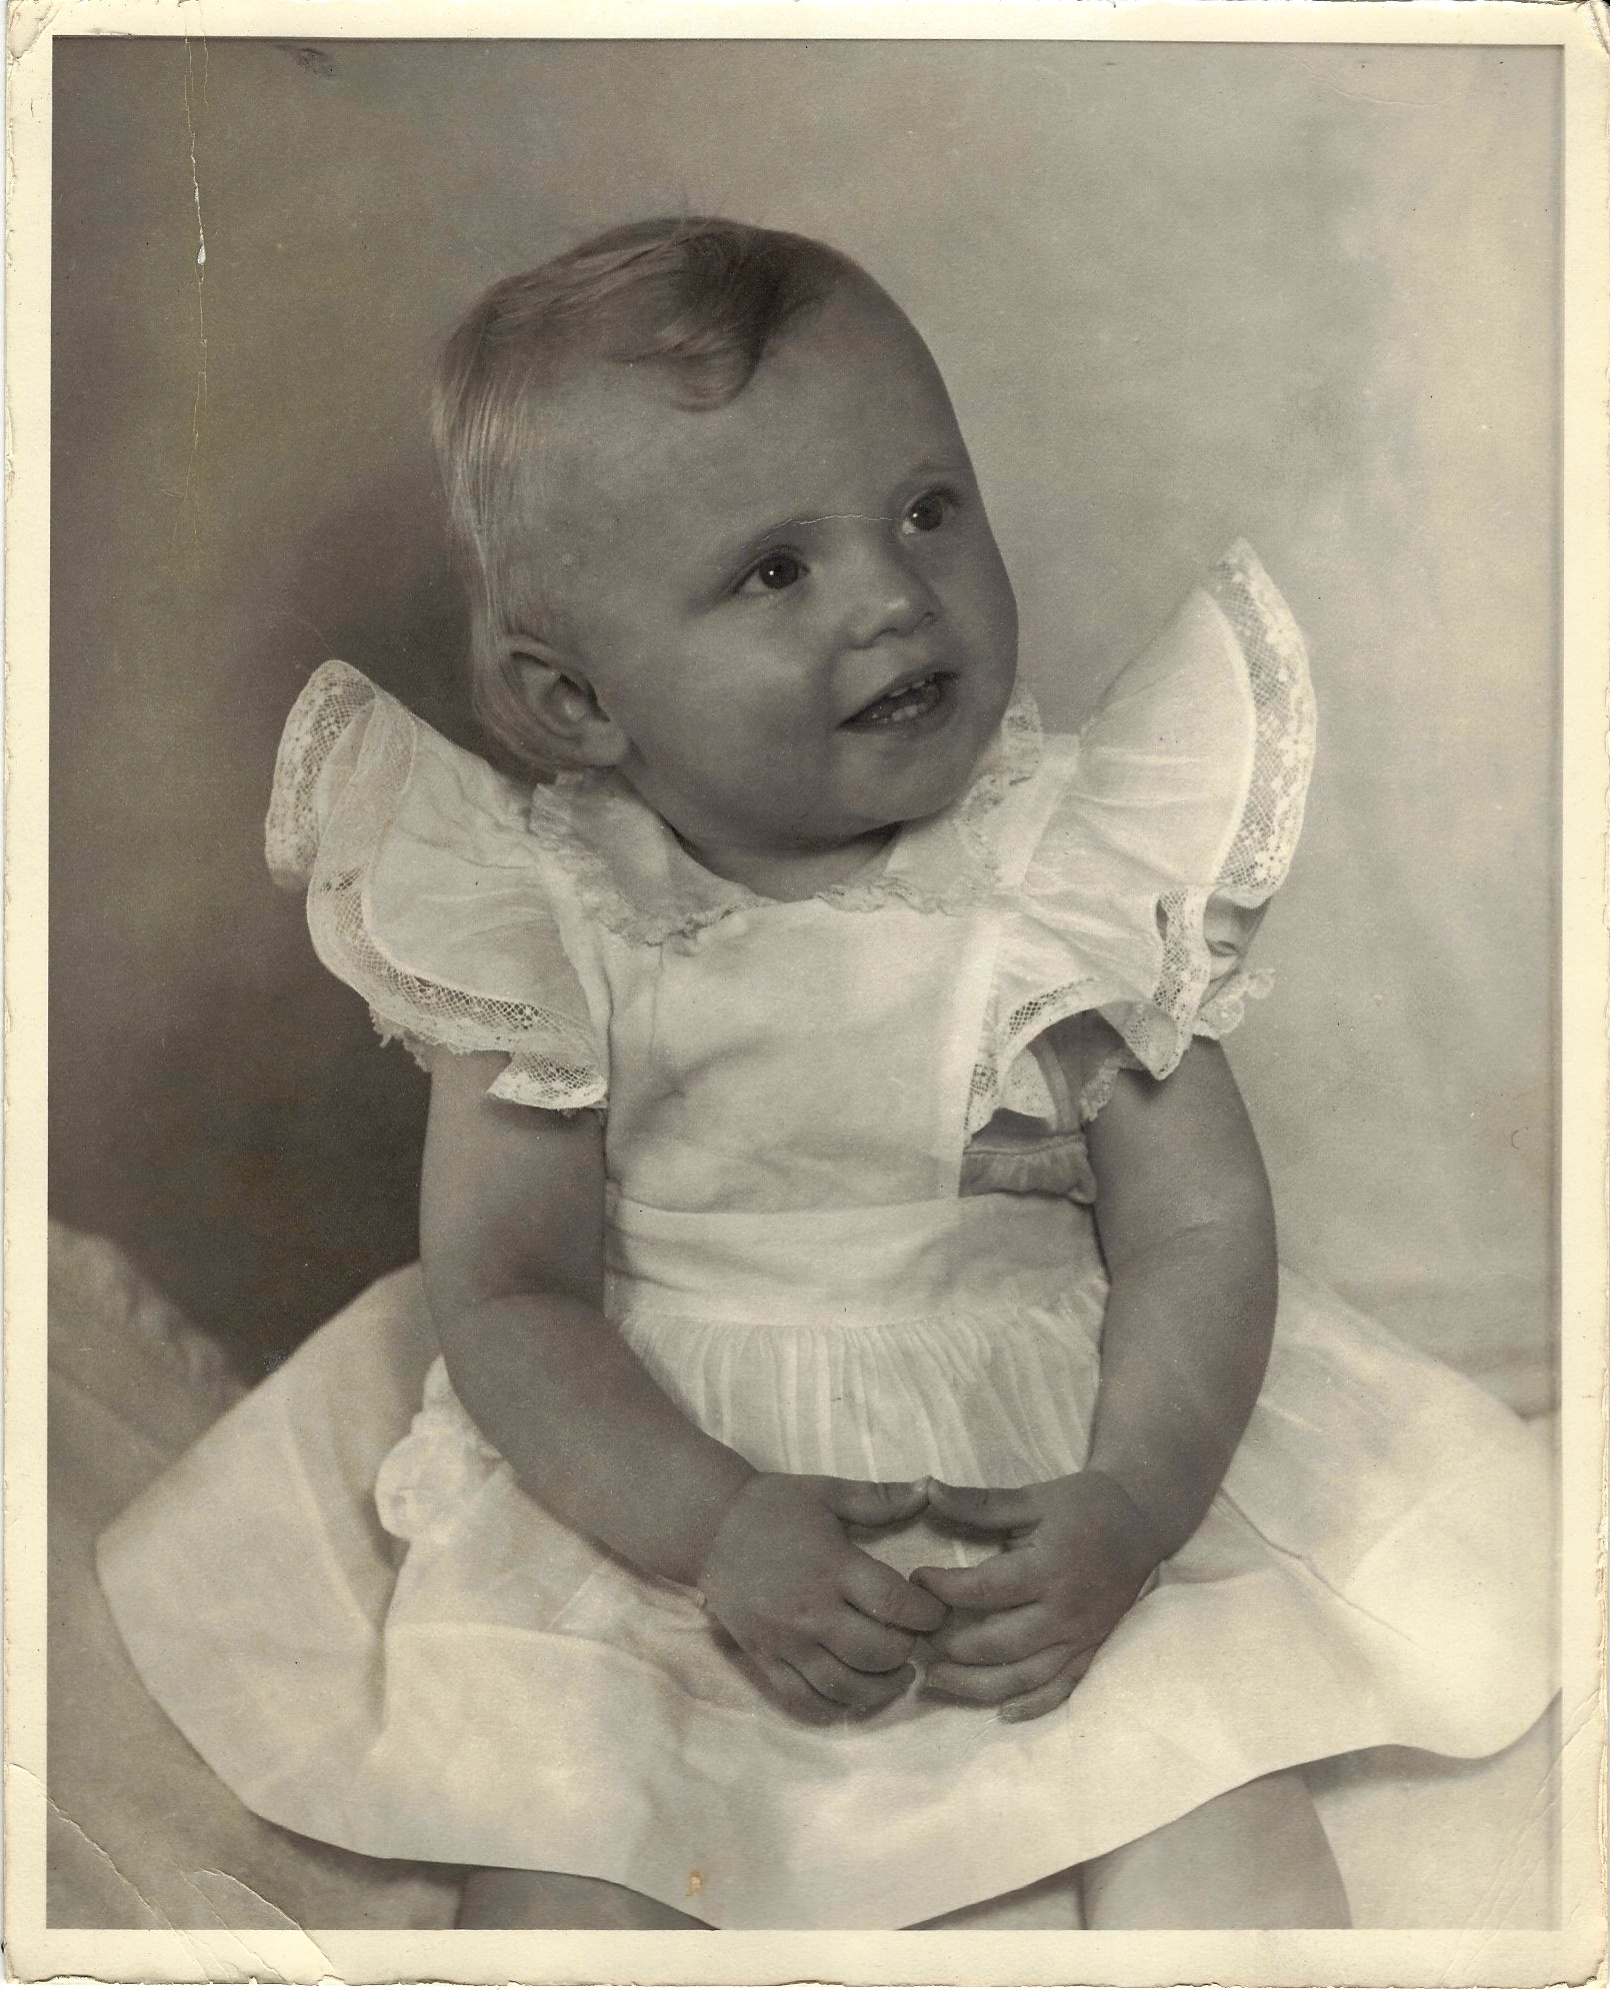 Karen Haukom, abt 1947